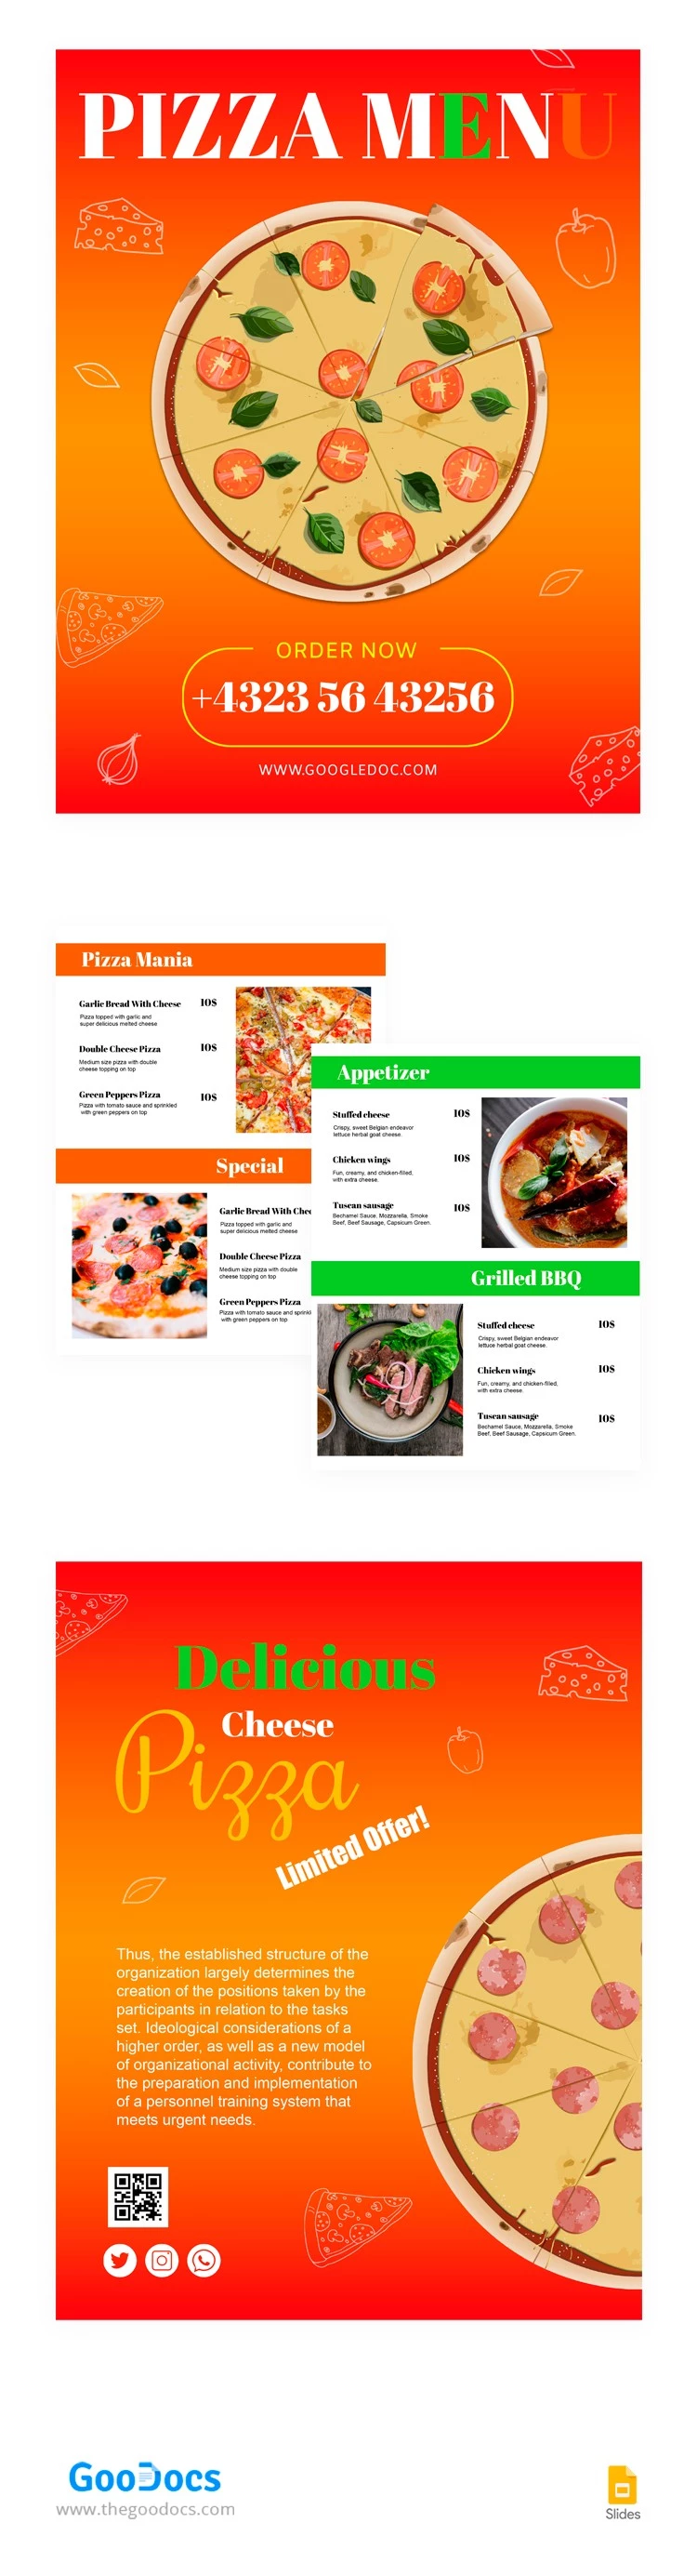 Italienisches Pizzeria-Restaurant Menü - free Google Docs Template - 10063587